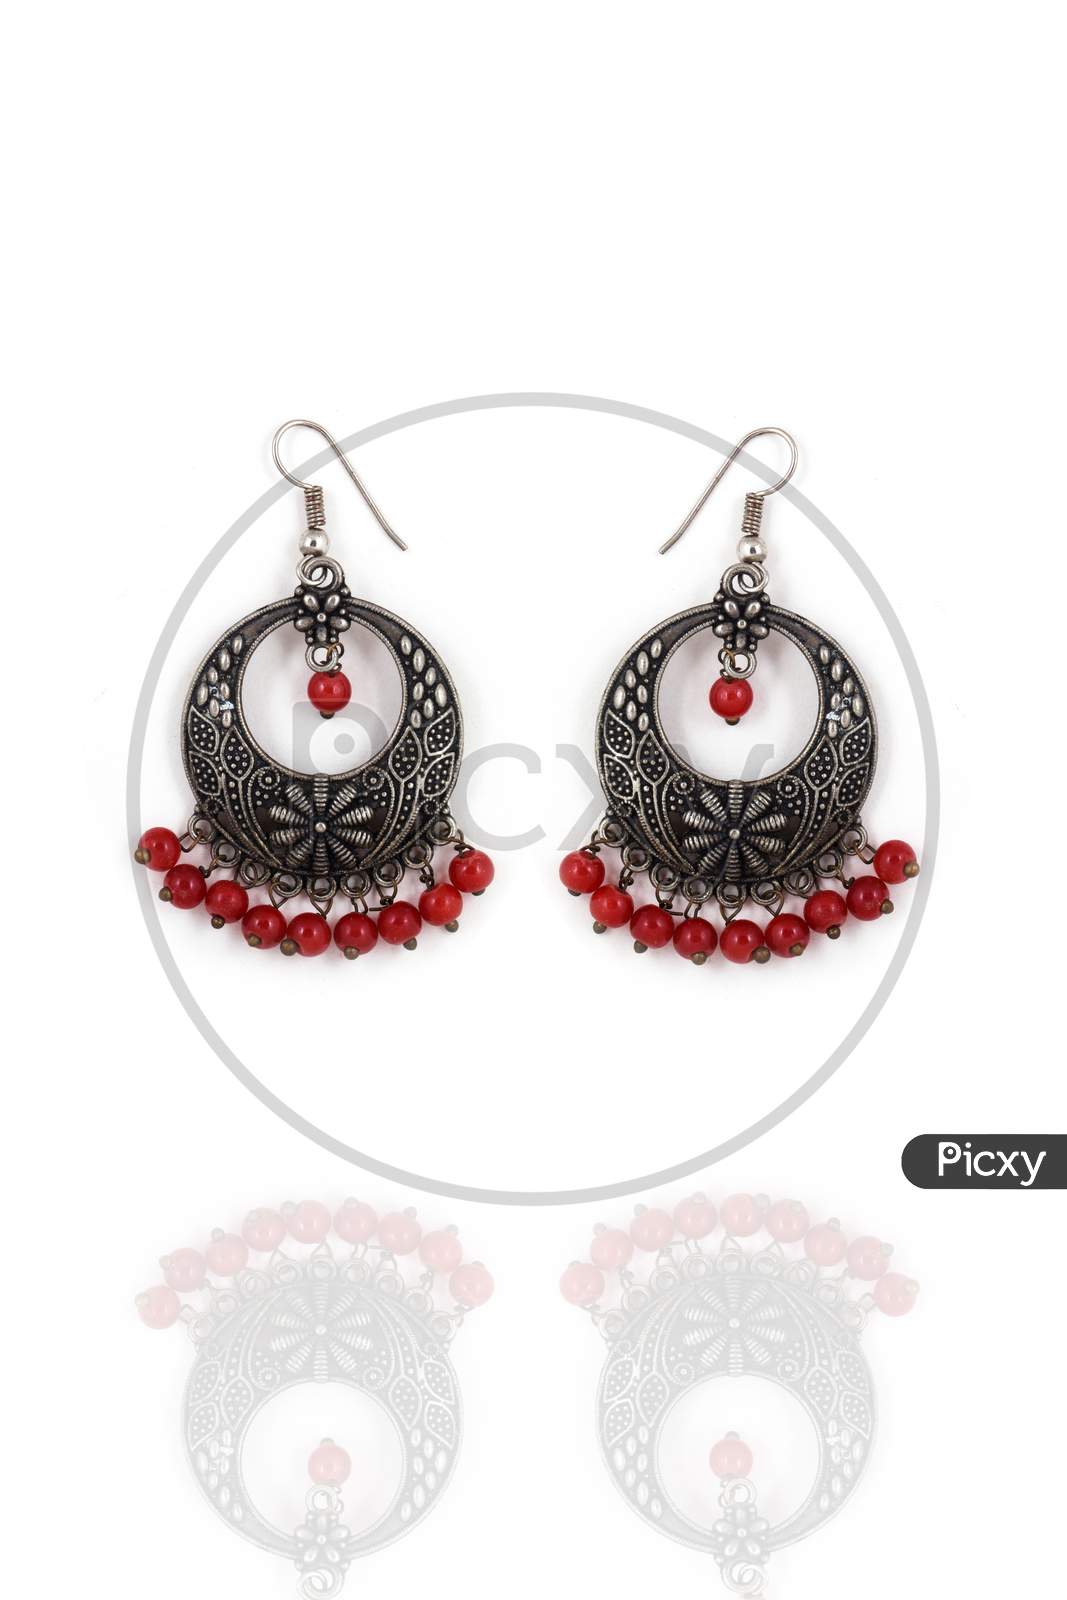 Silver Oxidized Earrings Ethnic Indian Style, Stylish With Red Beads, Jhumka Earrings, Dangle Drop Stud Earrings